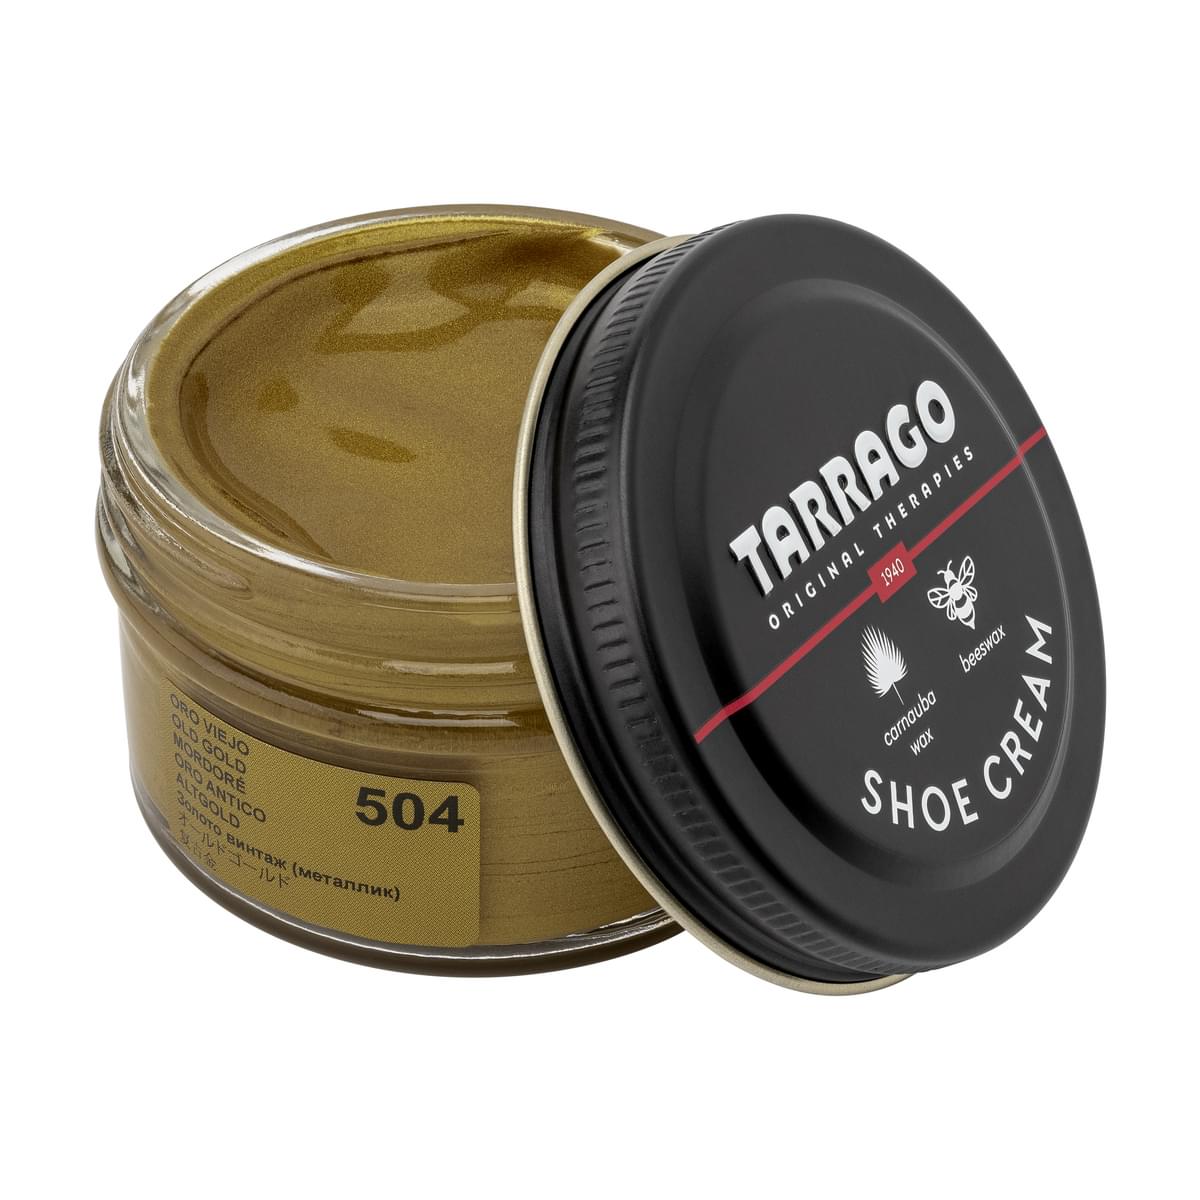 Tarrago Shoe Cream  - Old Gold - 504